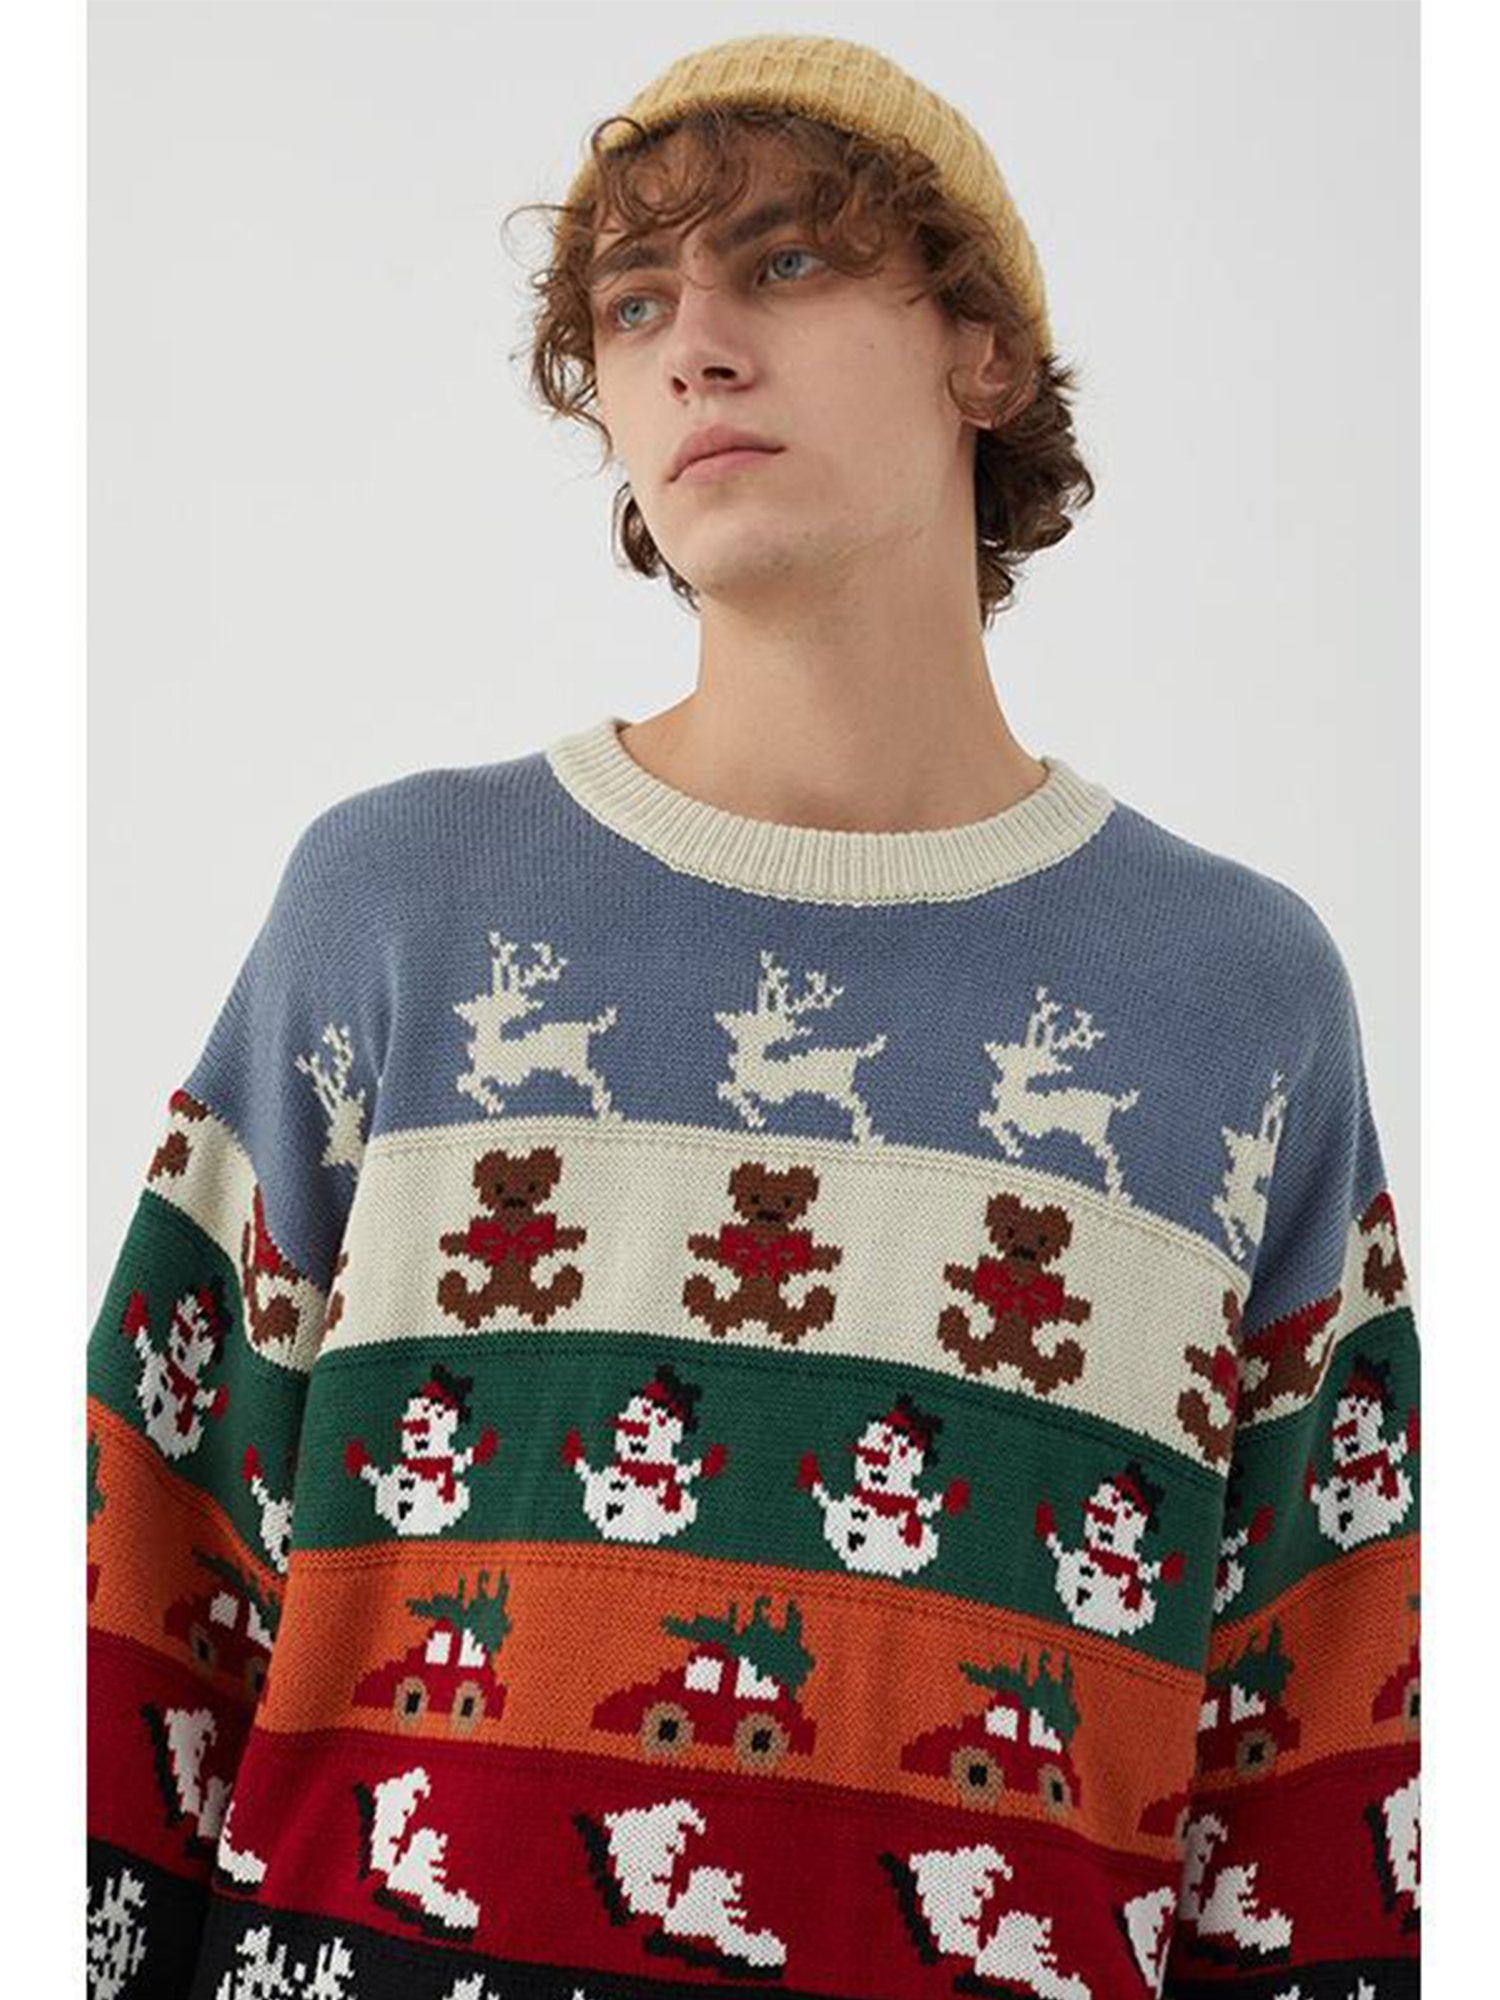 JUSTNOTAG Chirsitmas Fashion Print Round Neck Holiday Sweater